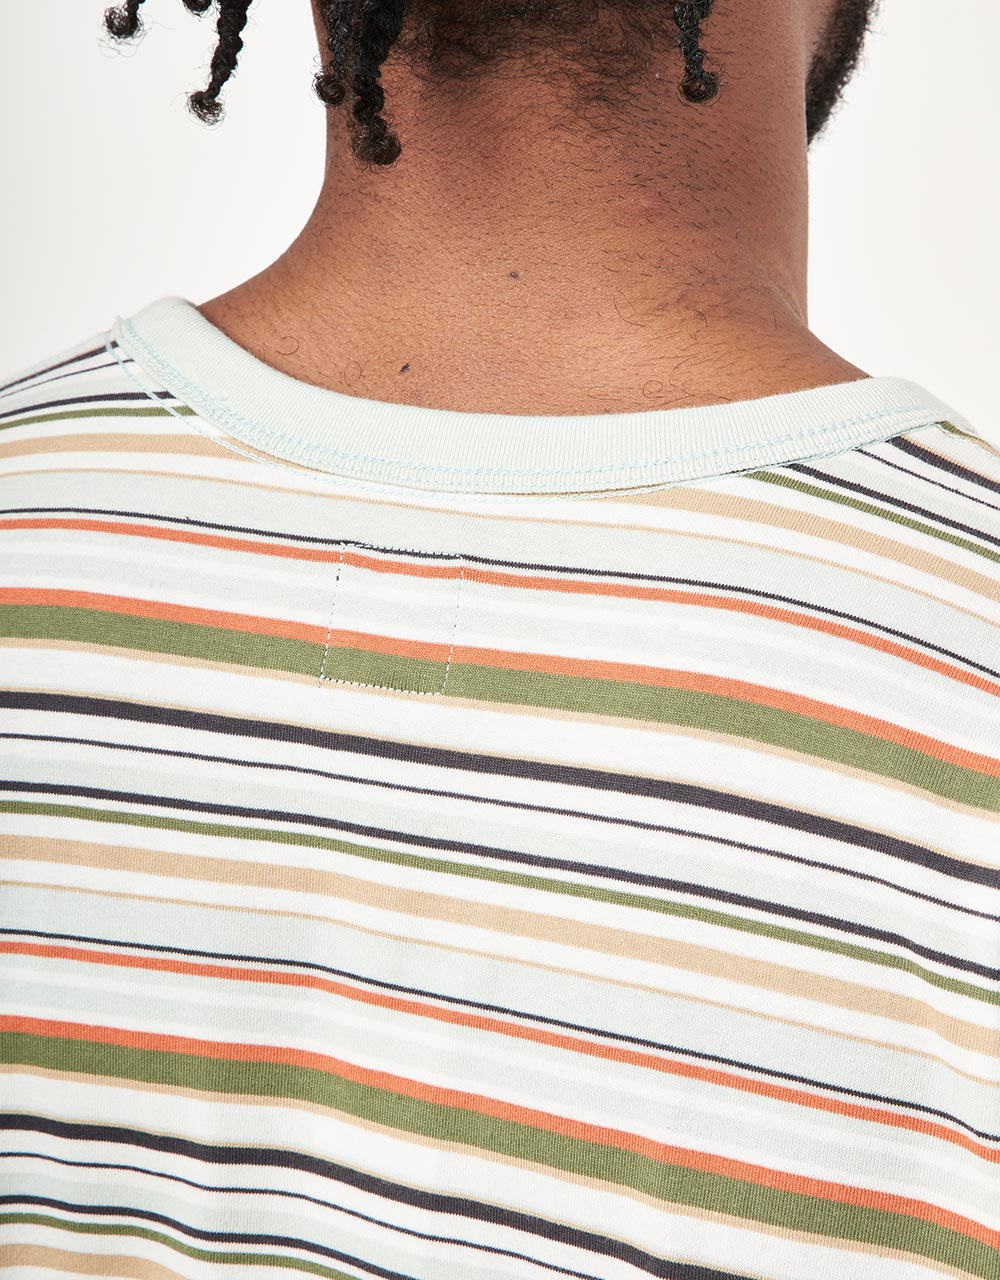 Vans Cullen Striped Pocket T-Shirt - Pale Aqua/Marshmallow